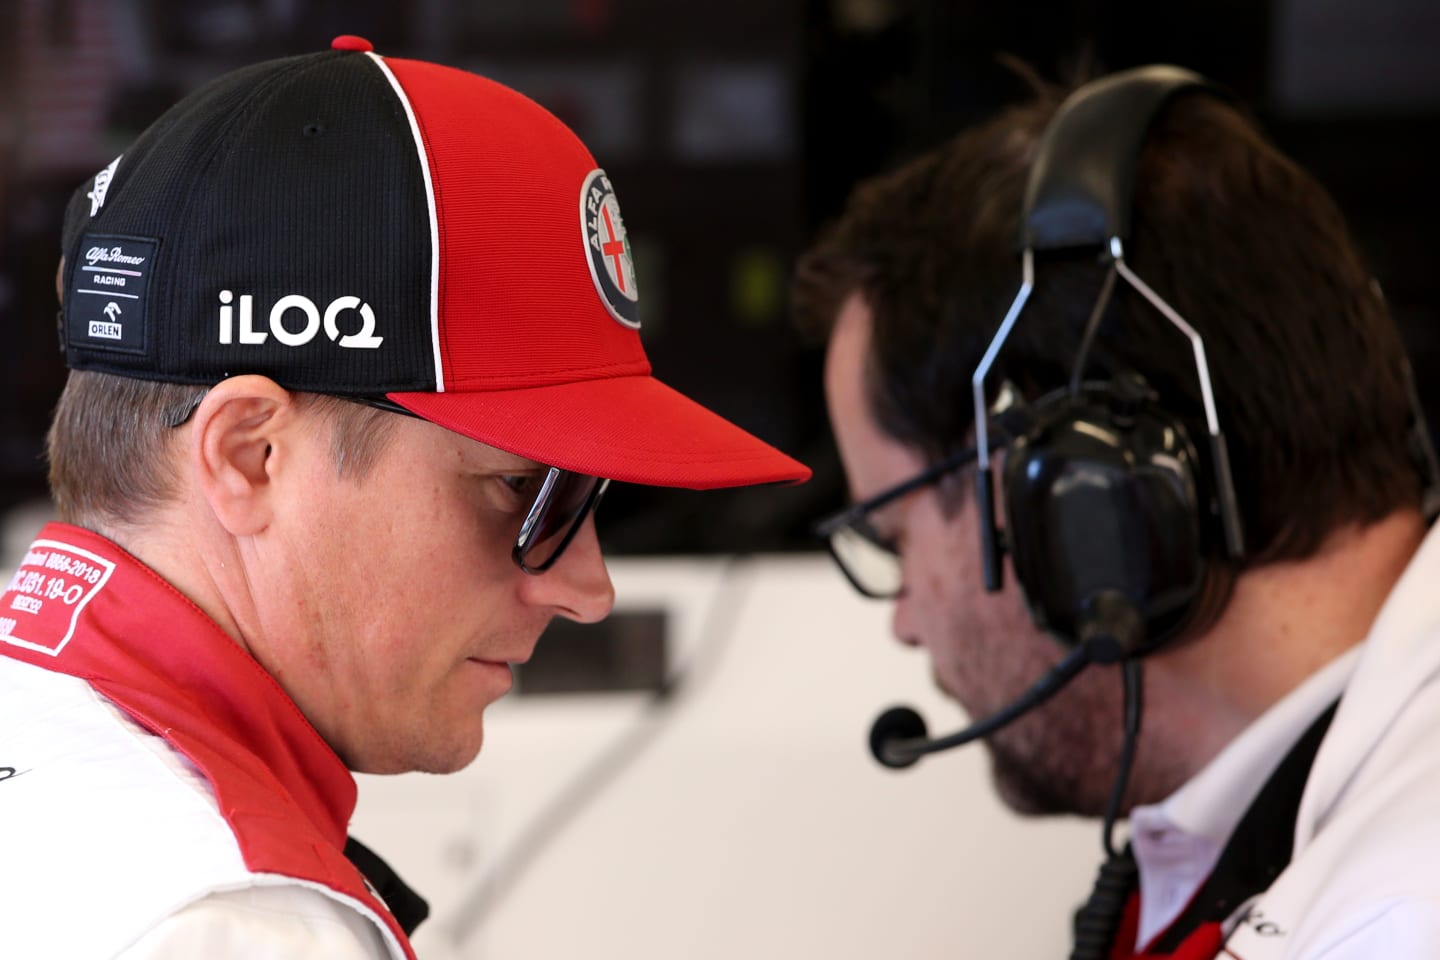 BARCELONA, SPAIN - FEBRUARY 26: Kimi Raikkonen of Finland and Alfa Romeo Racing prepares to drive